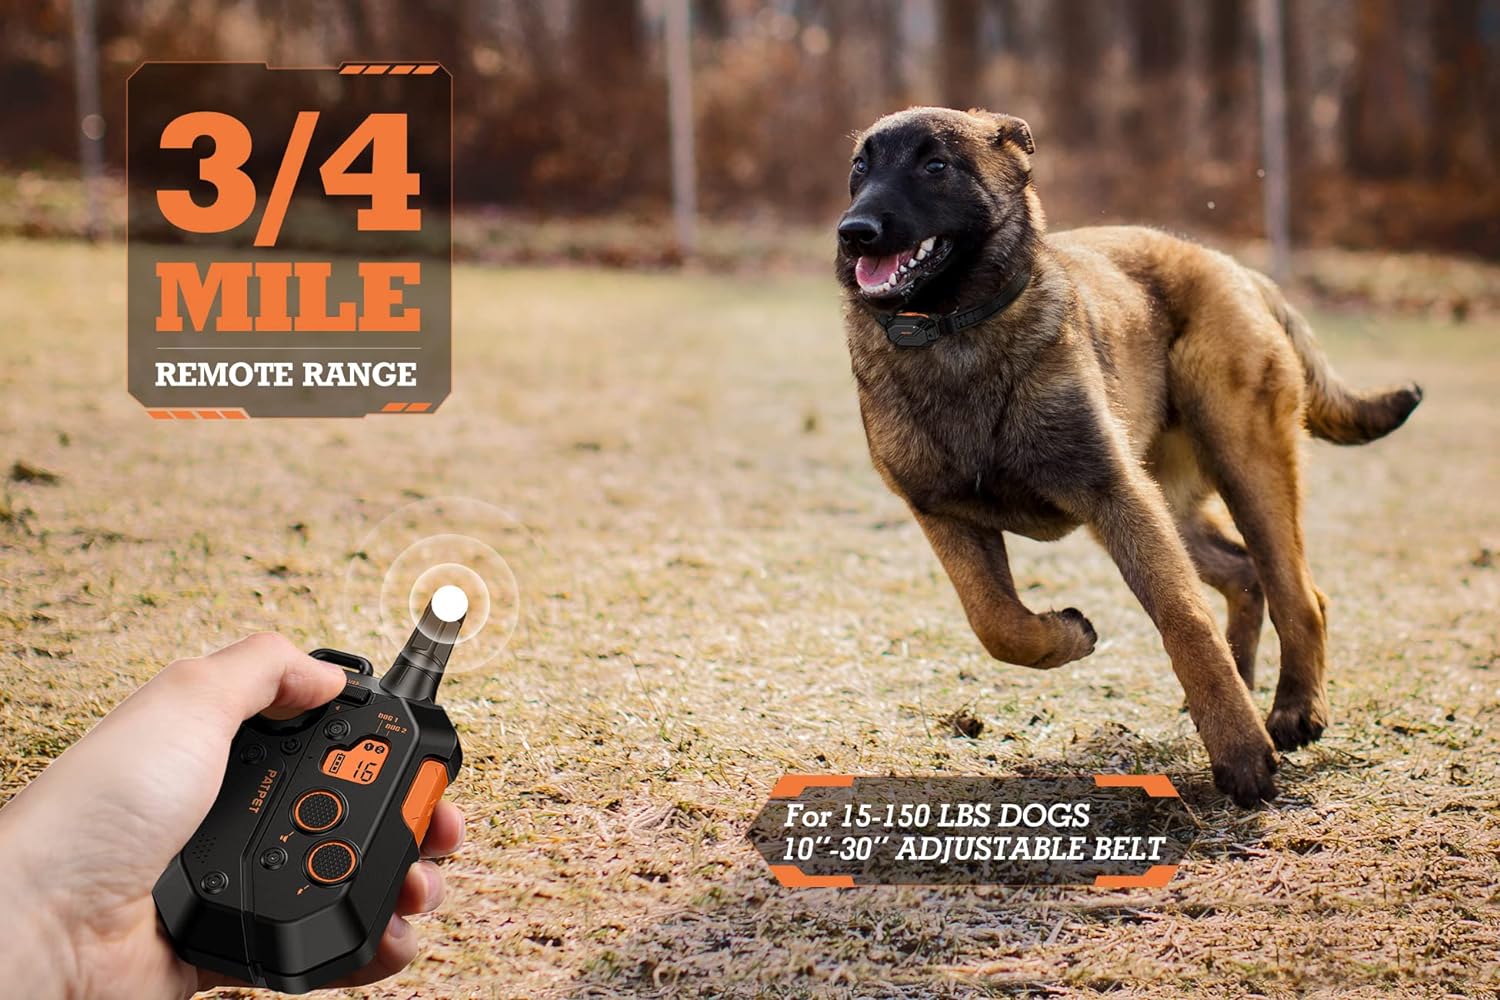 PATPET Shock Collar for Medium Large Dog(15-150lbs) - 3/4 Mile Range E Collar, Dog Training Collar with Remote